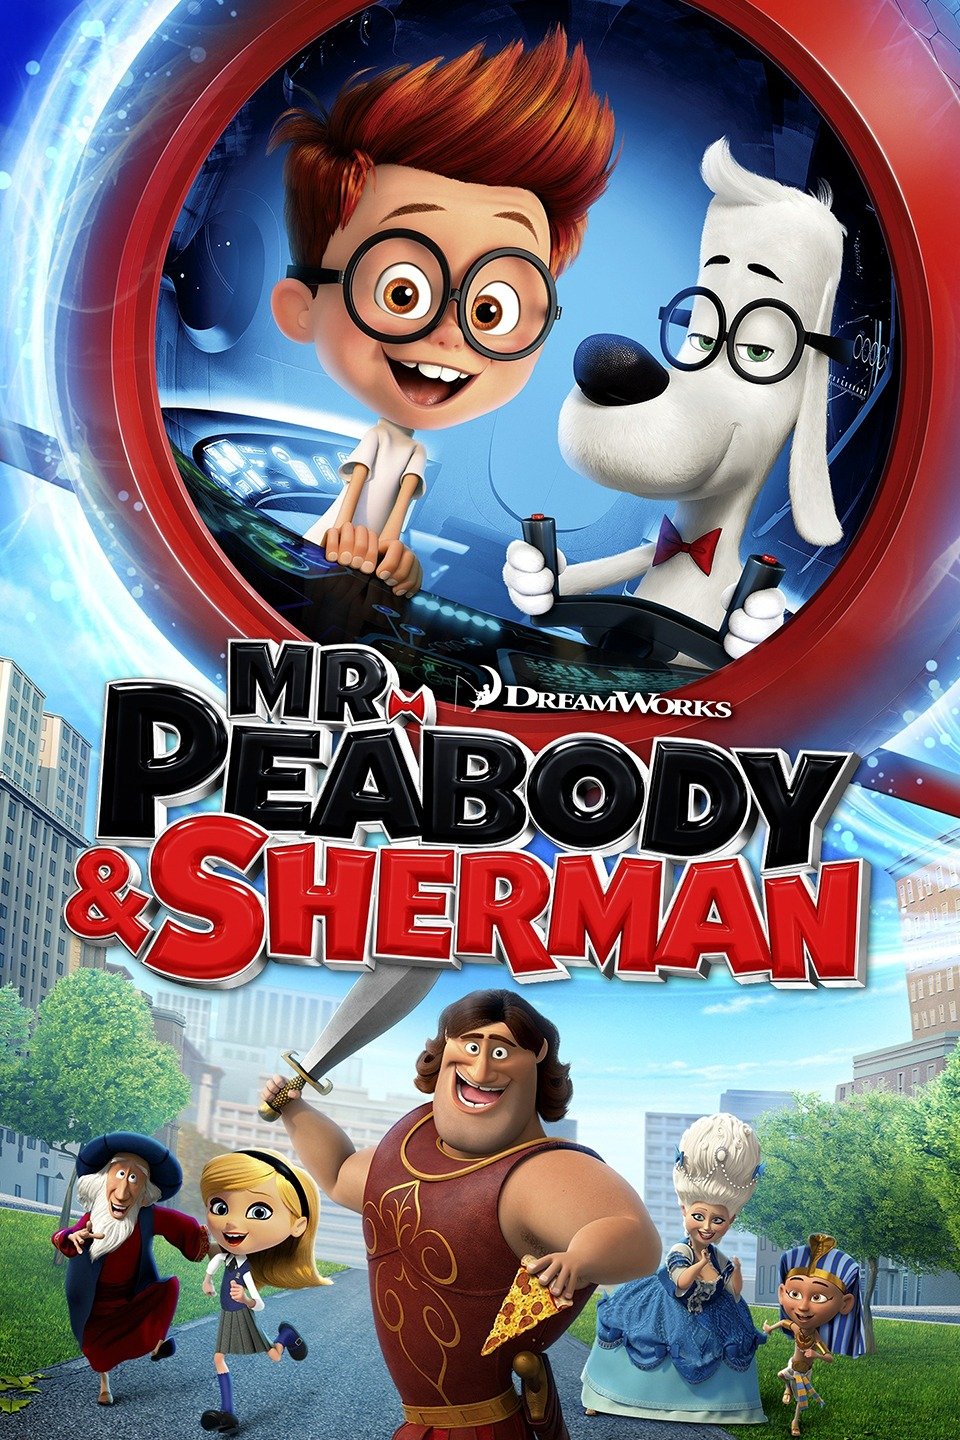 Mr. Peabody & Sherman - Wikipedia